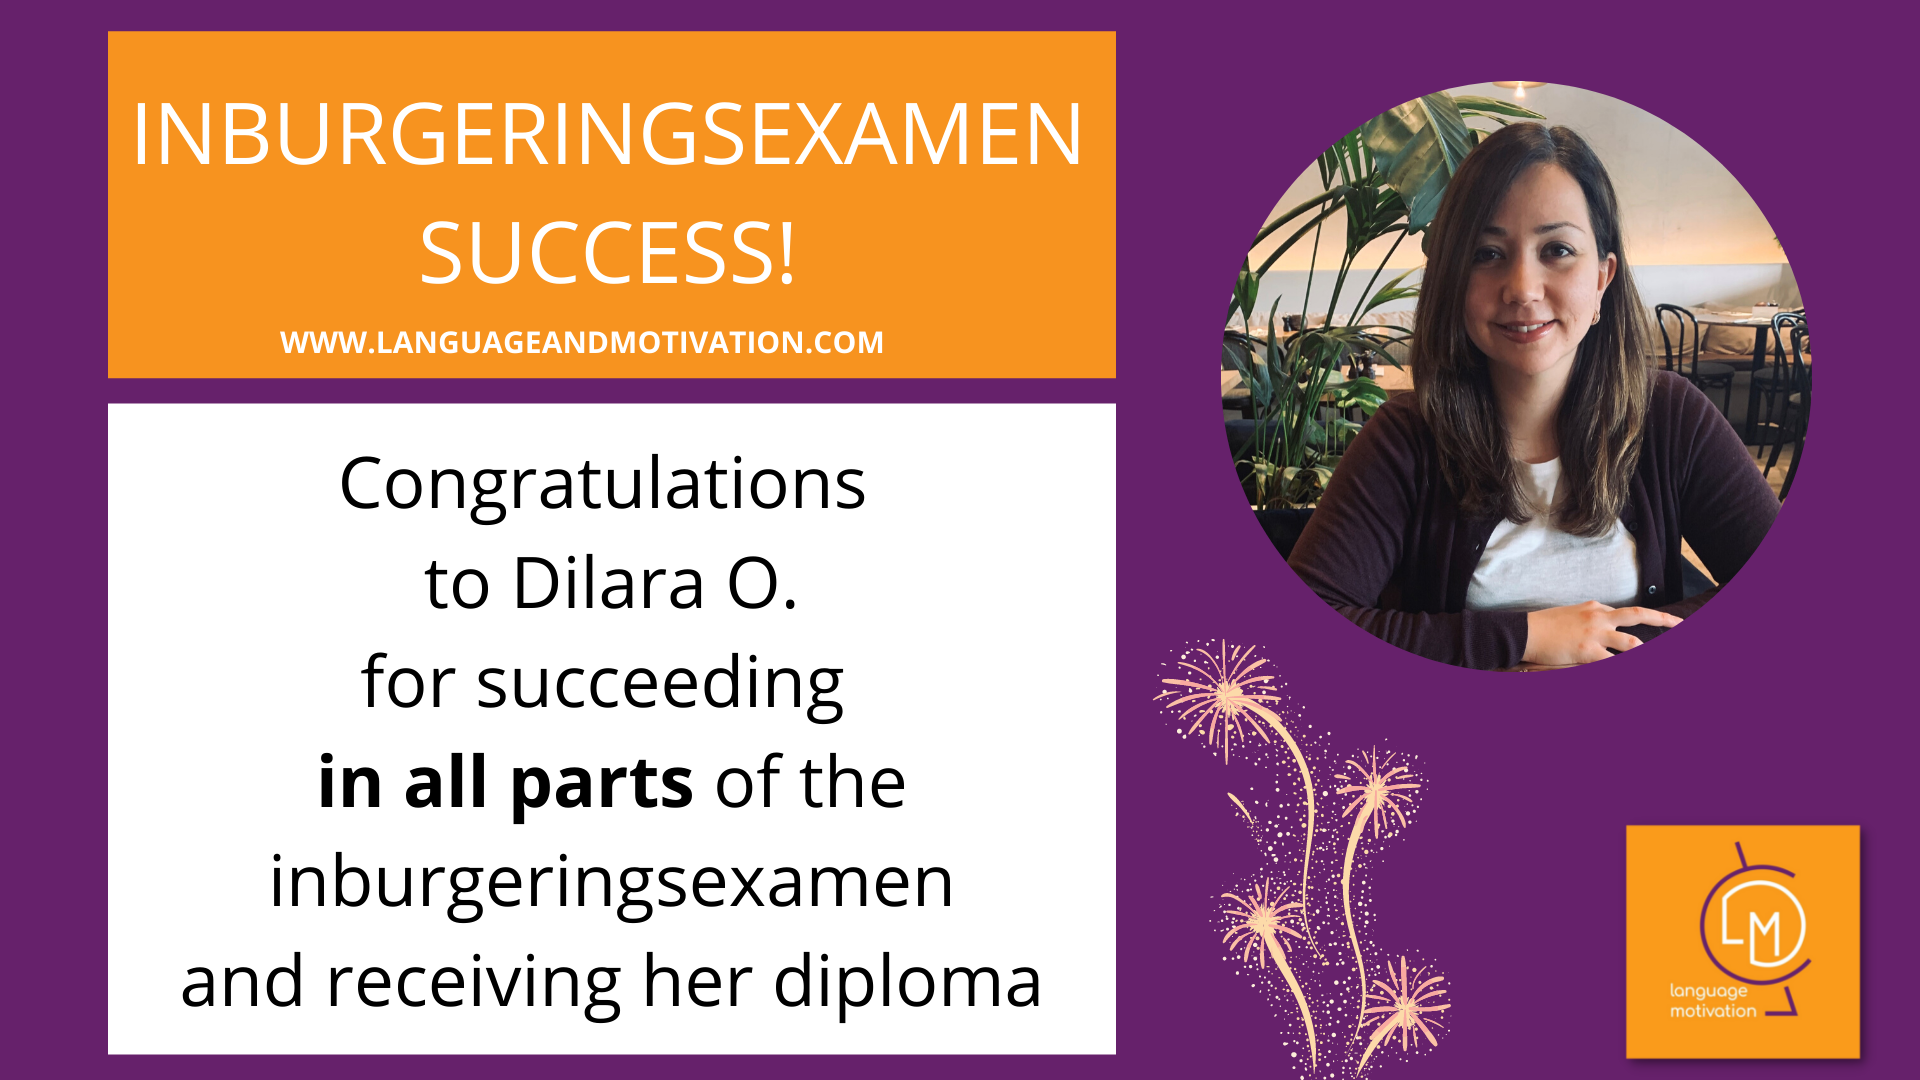 Congratulations to Dilara N. for receiving her #inburgeringsdiploma